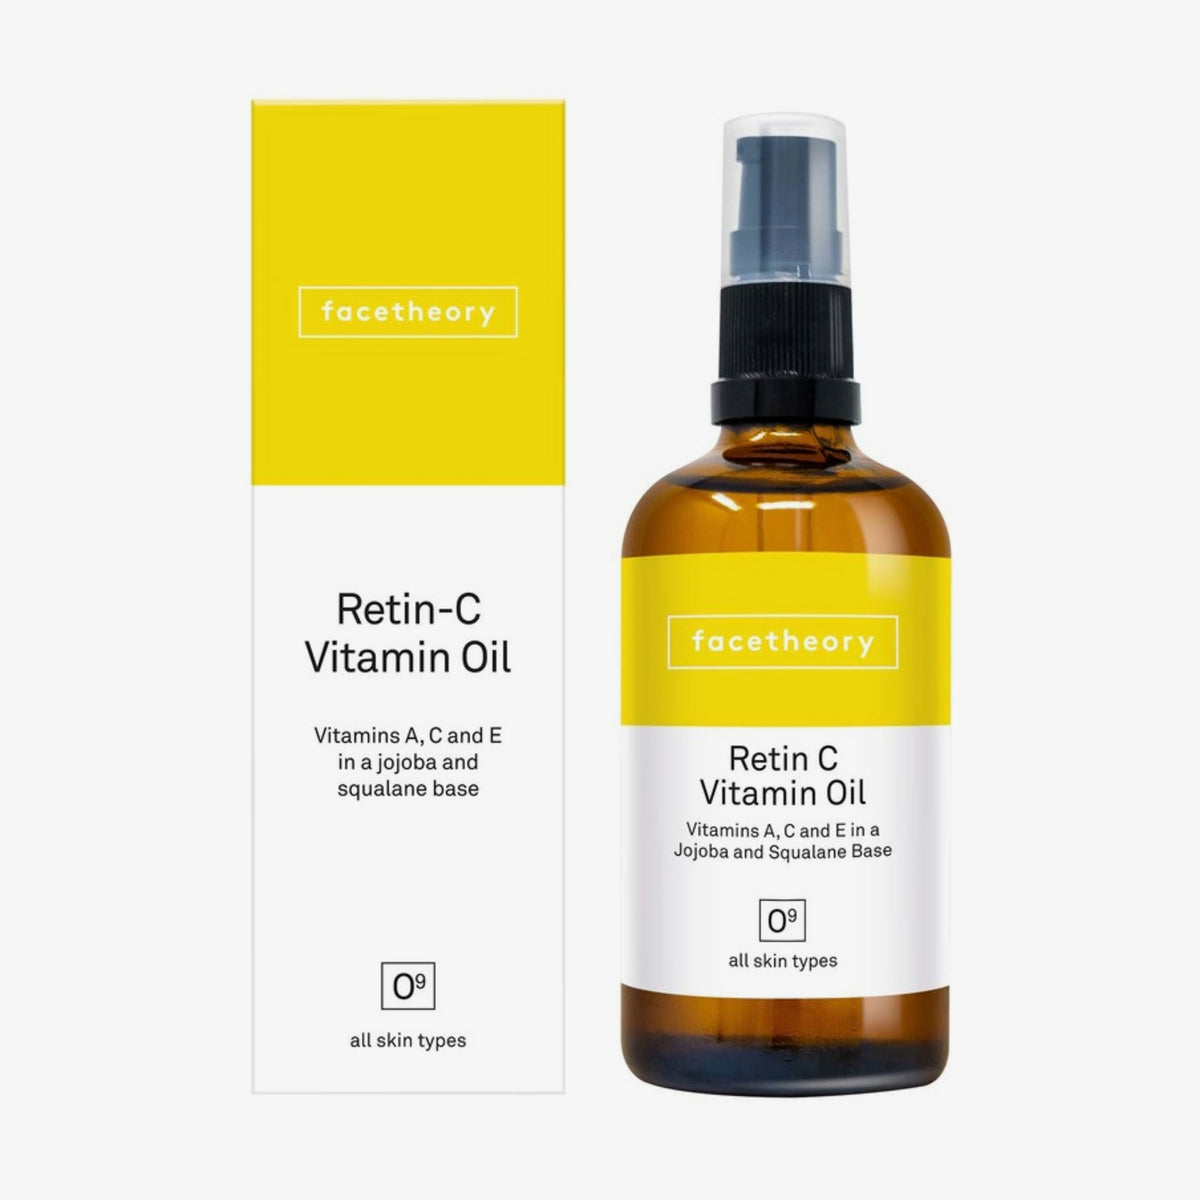 facetheory | Retin-C Vitamin Oil